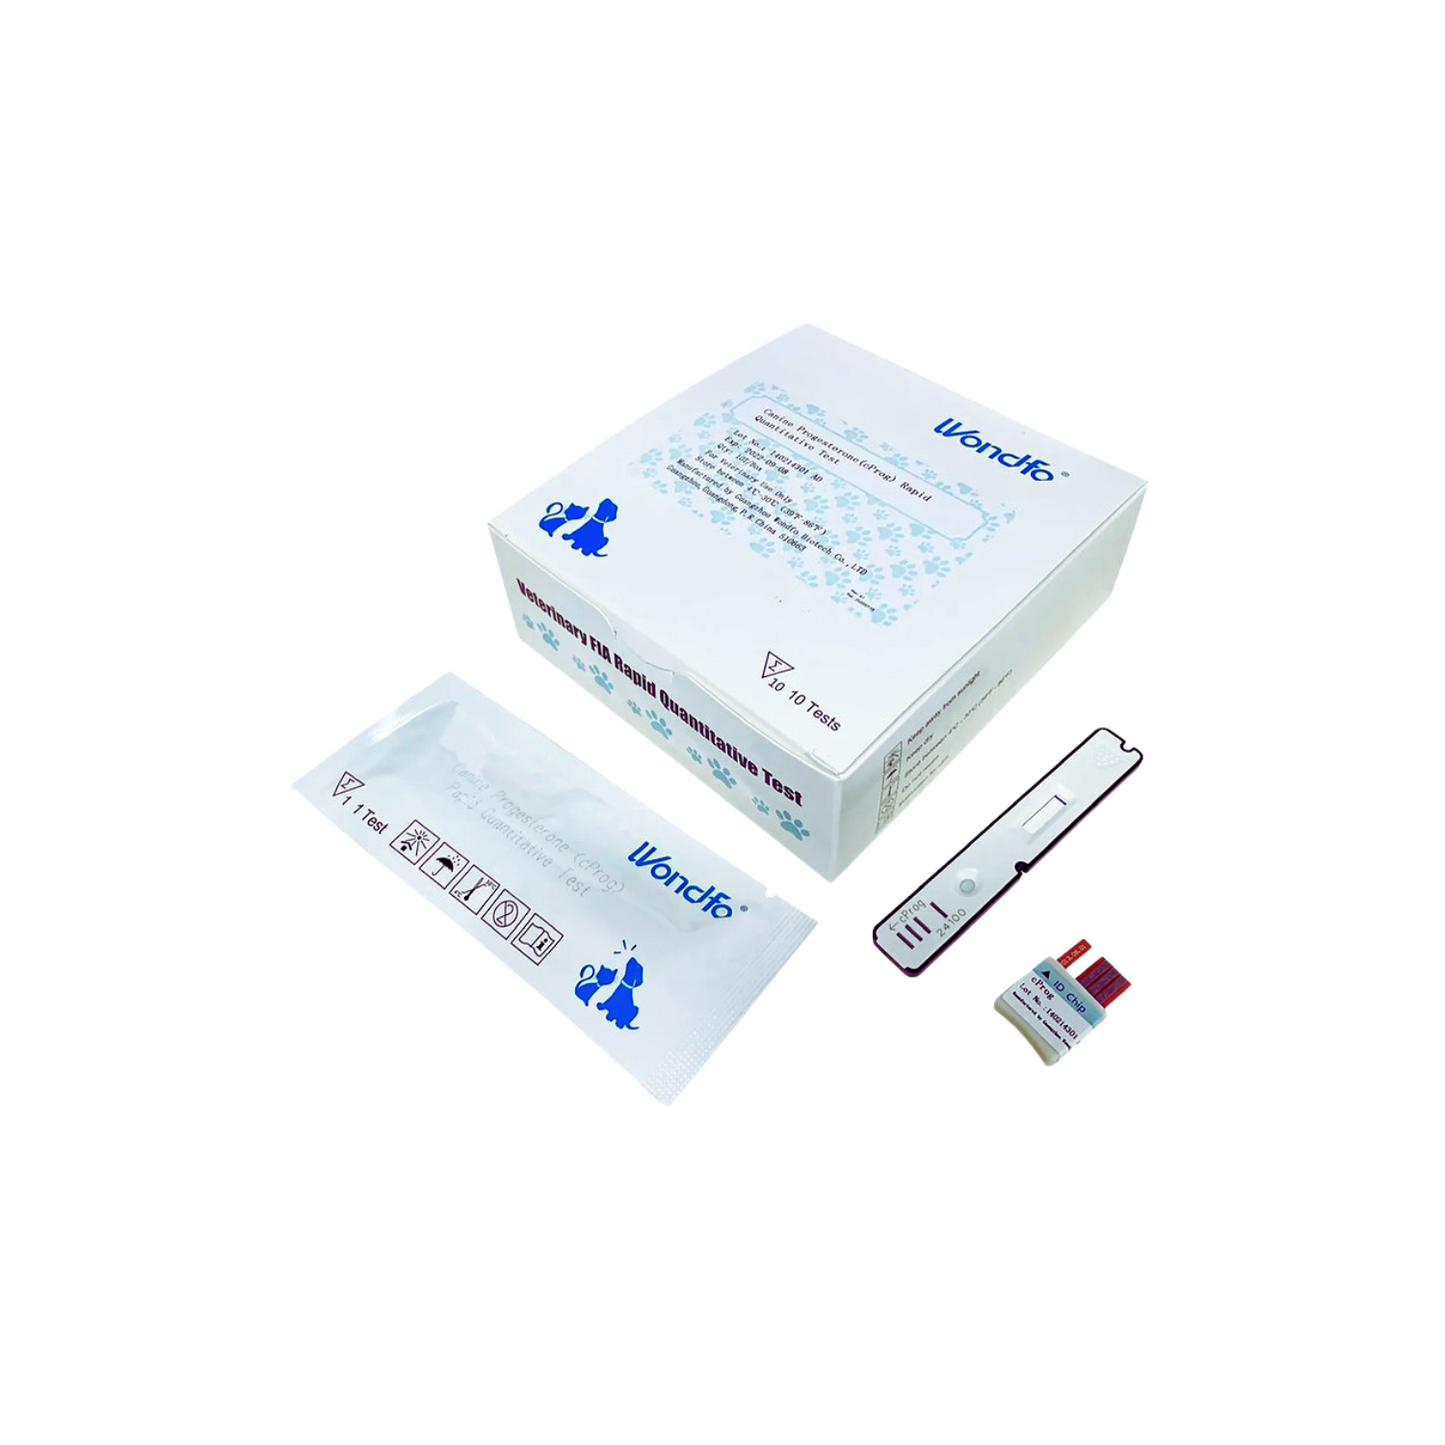 Progesterone Testing Machine + Kit - Wondfo Finecare Plus Immunofluorescence Quantitative Analyzer